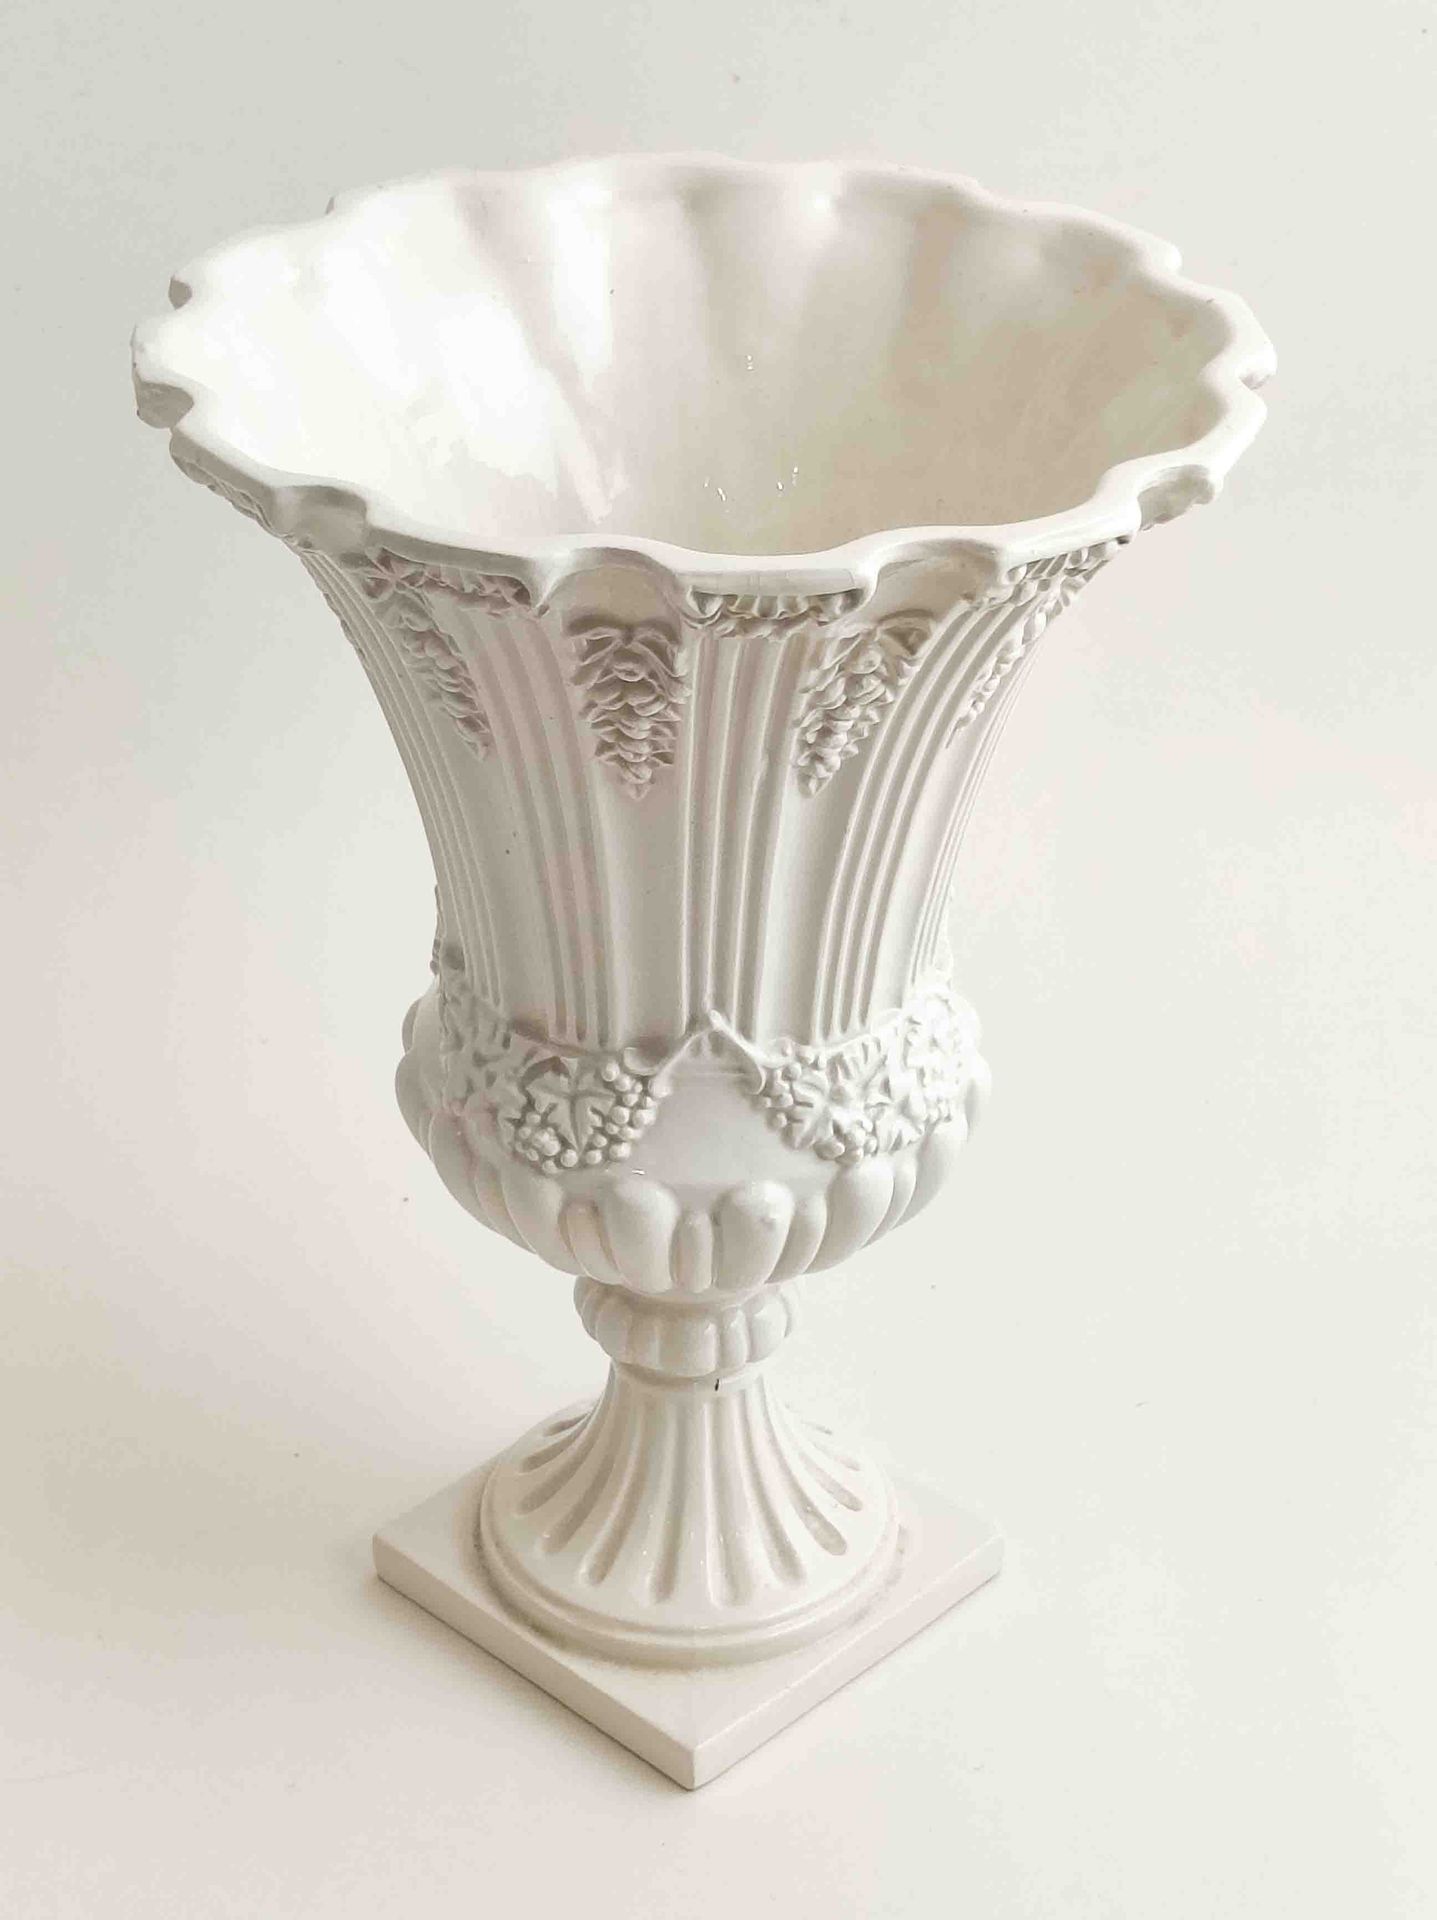 Null Grand vase amphore en céramique
 
N° interne A0170300006